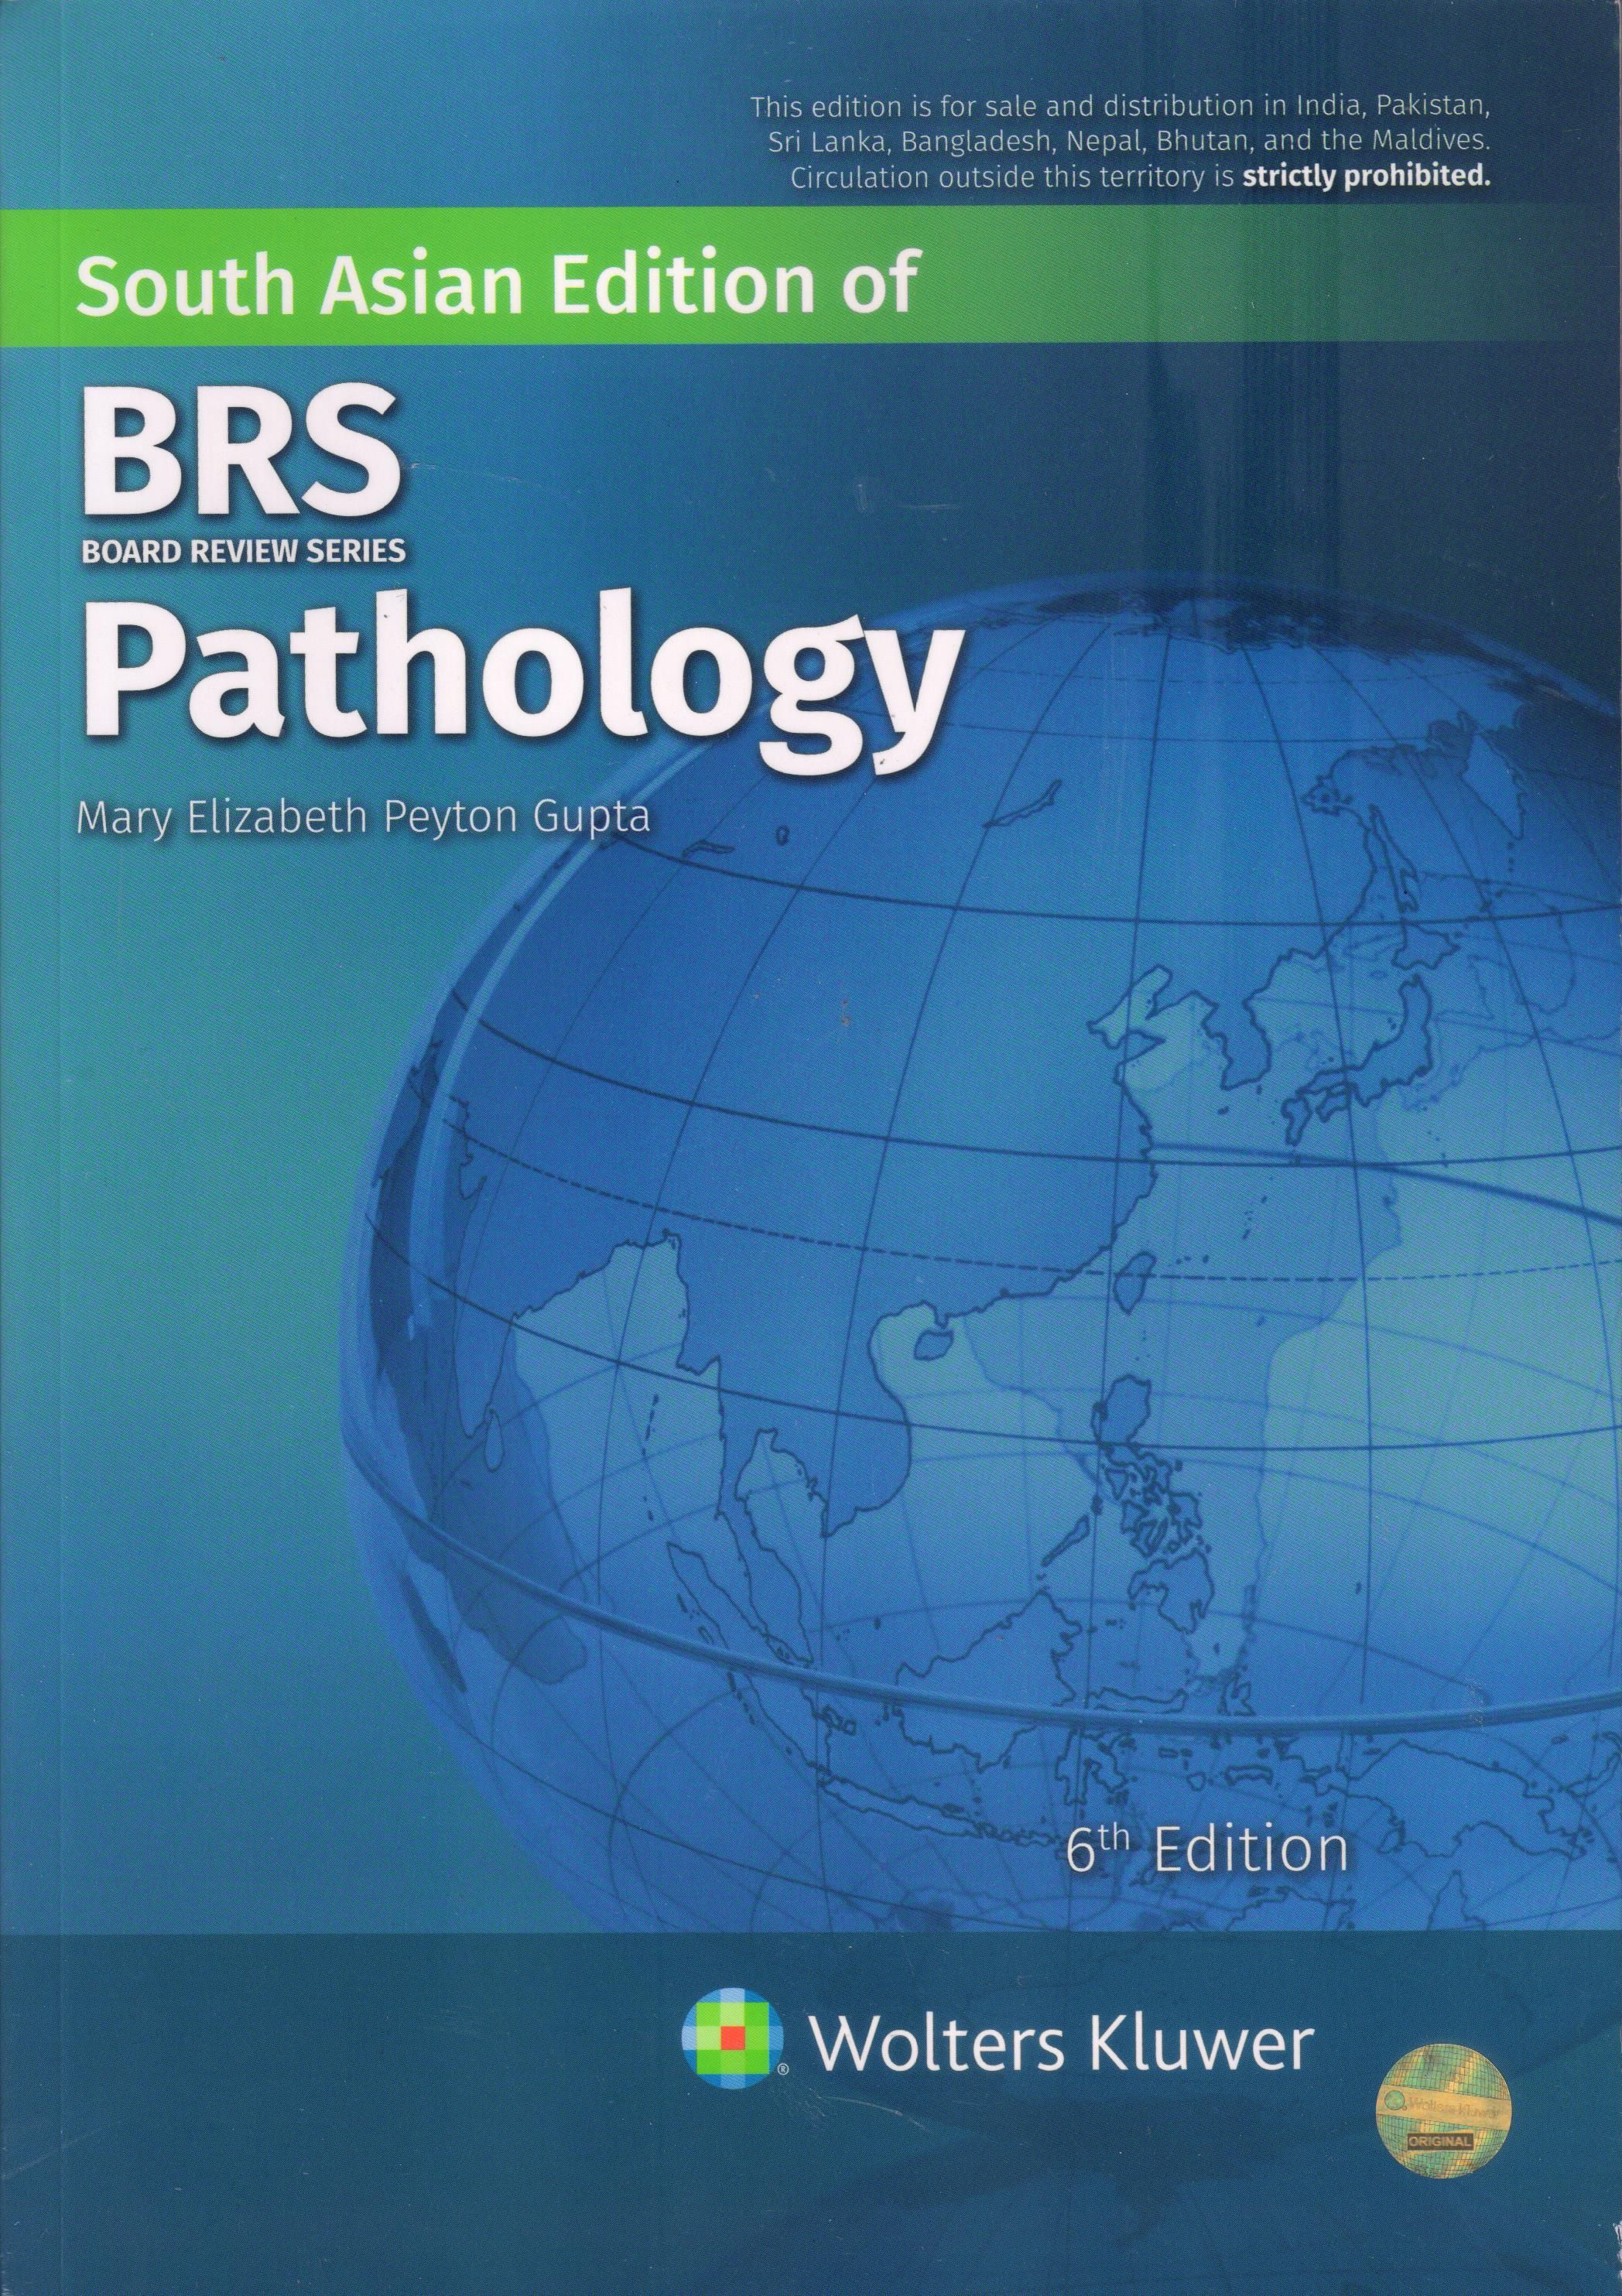 

basic-sciences/pathology/brs-board-review-series-pathology-6-ed--9789389859317